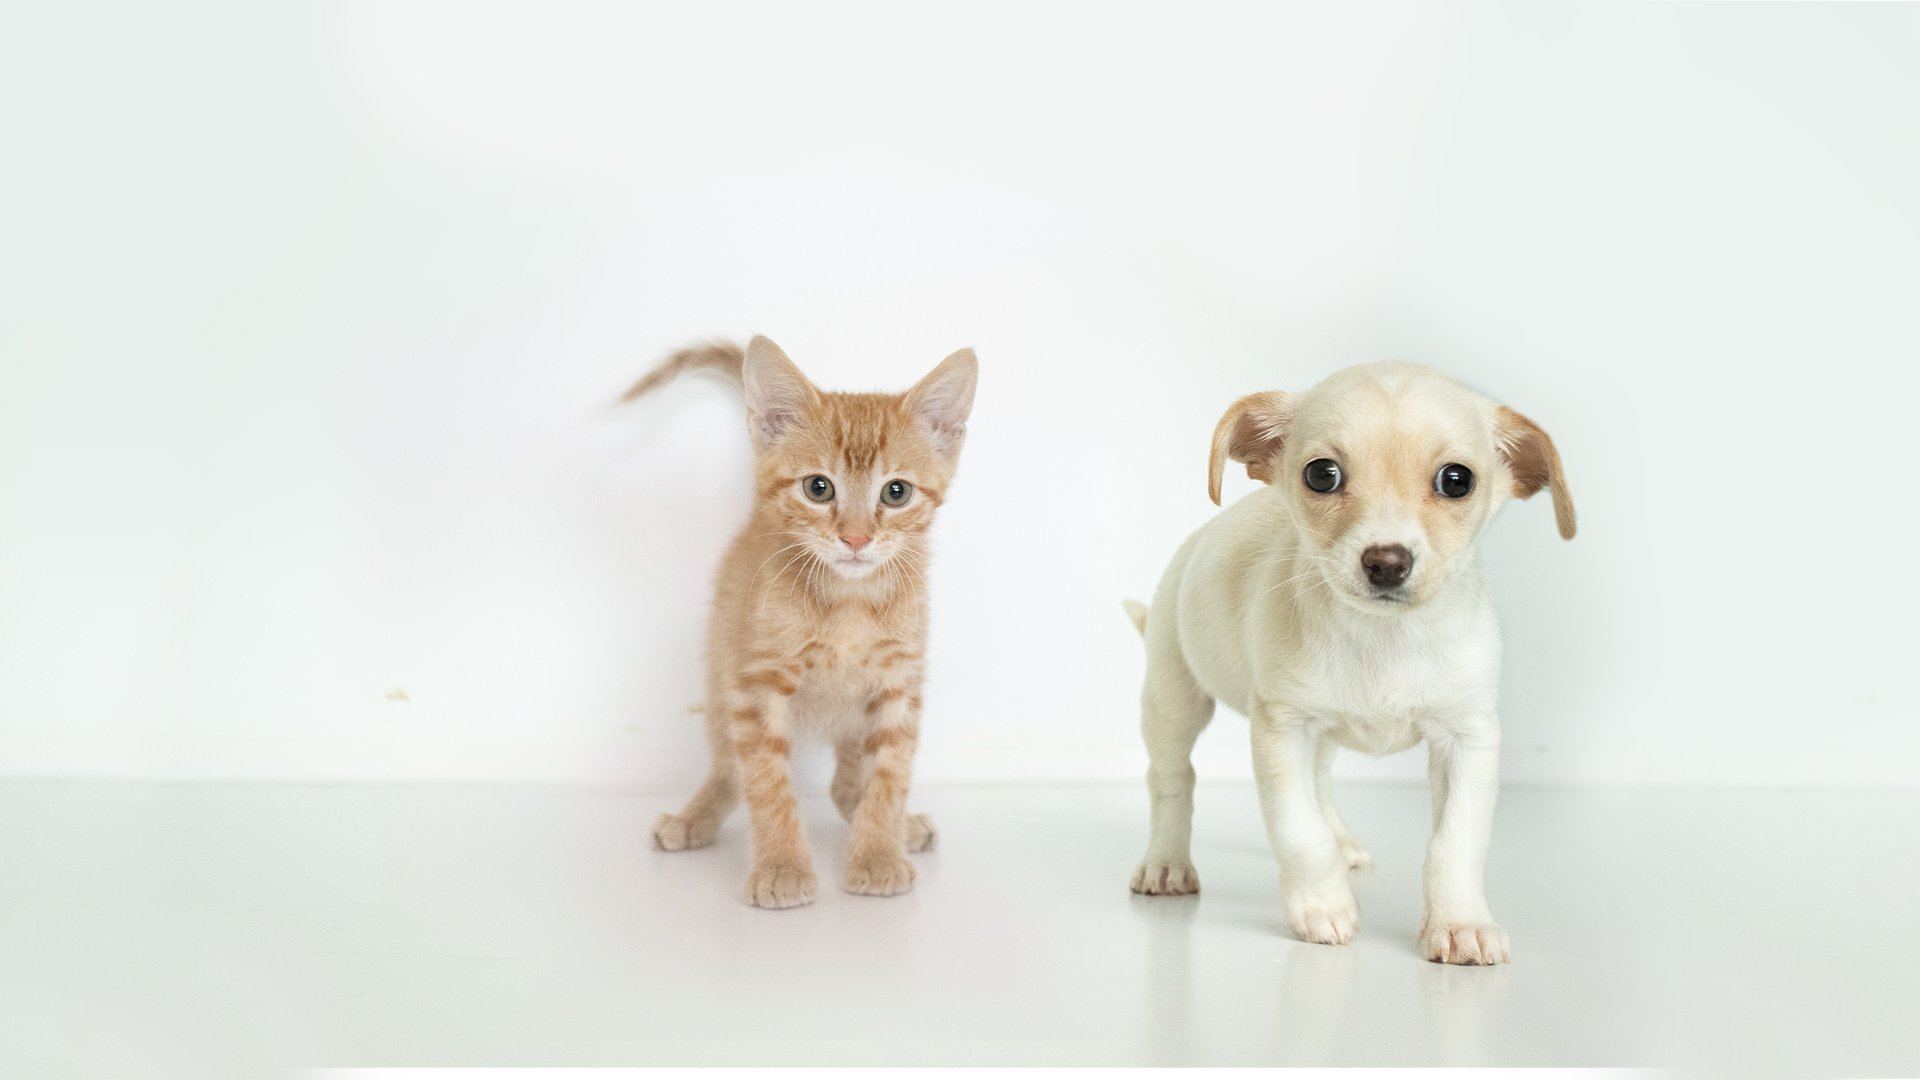 About Adoption - Louisiana SPCA